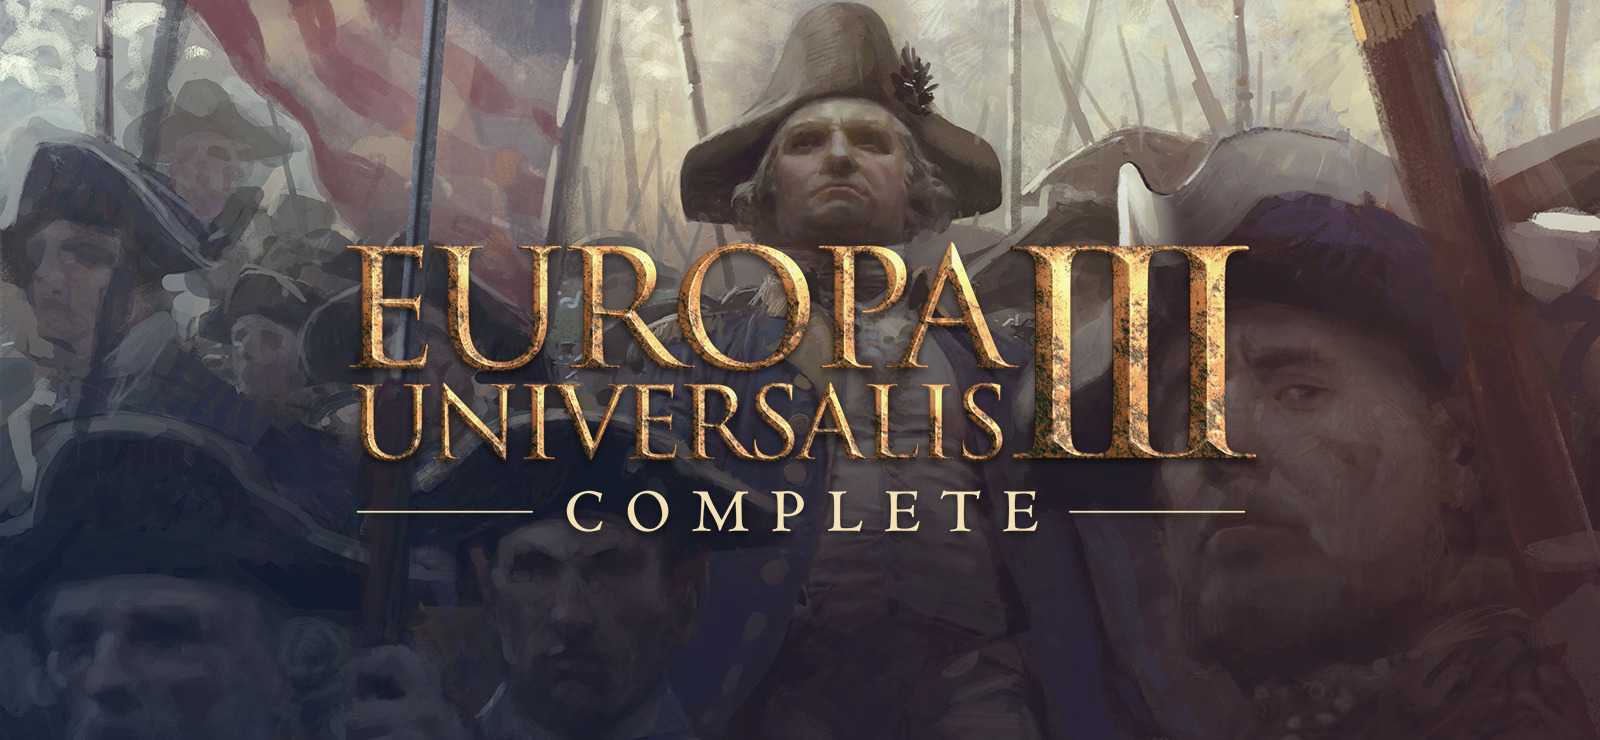 Europa Universalis III Complete Free Download 